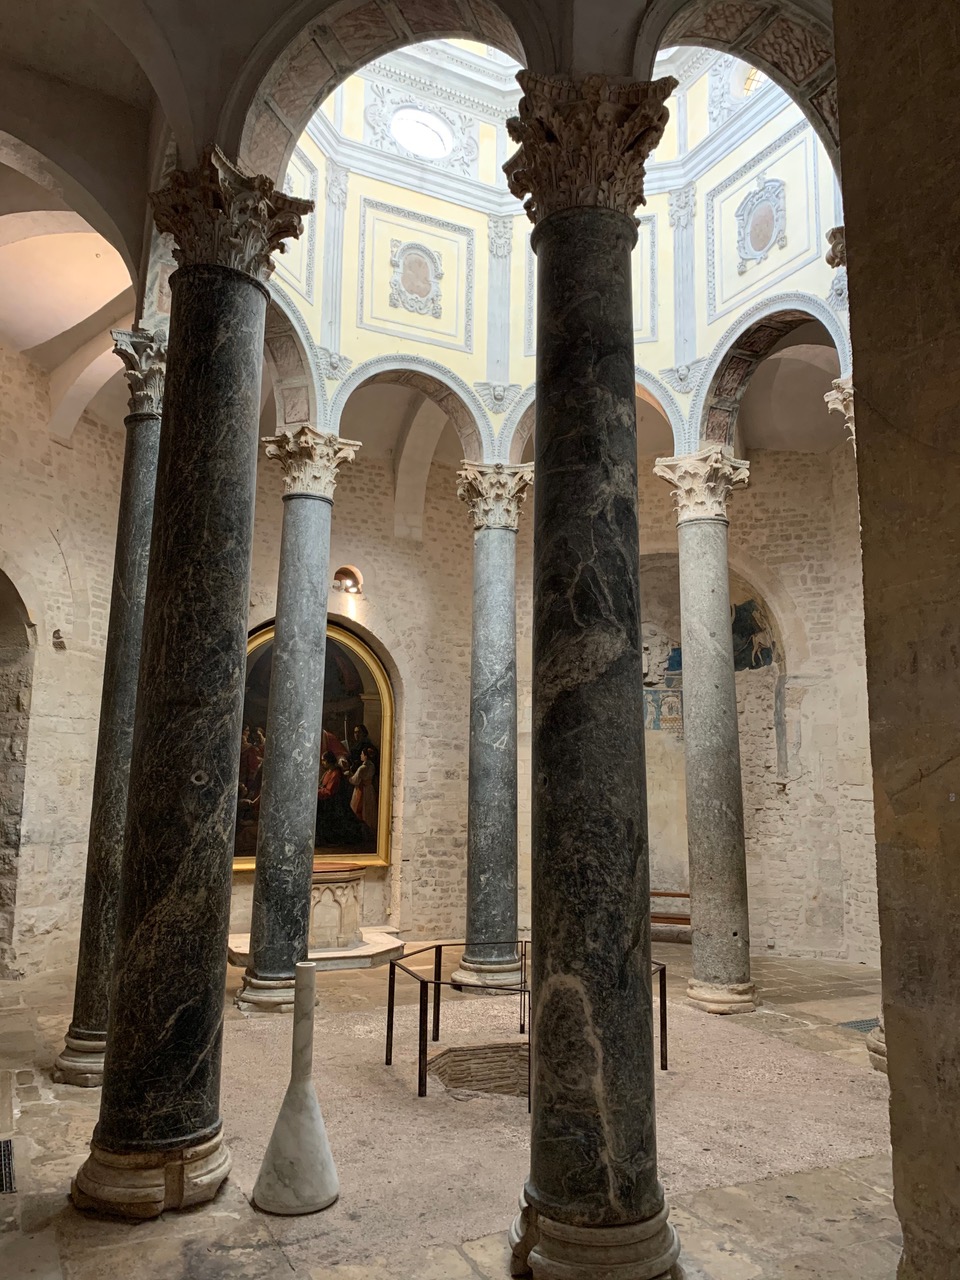 Eight marble columns surrounding an octagonal baptismal pool